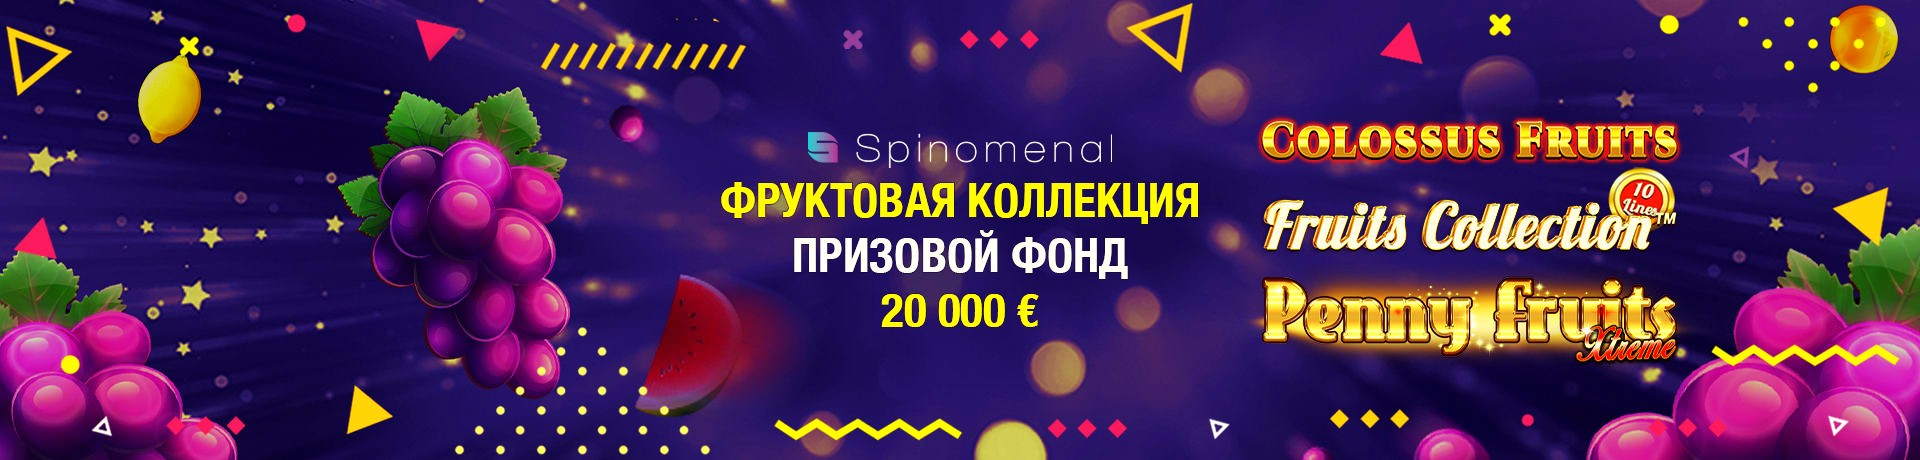 Spinomental призовой фонд 20000 евро